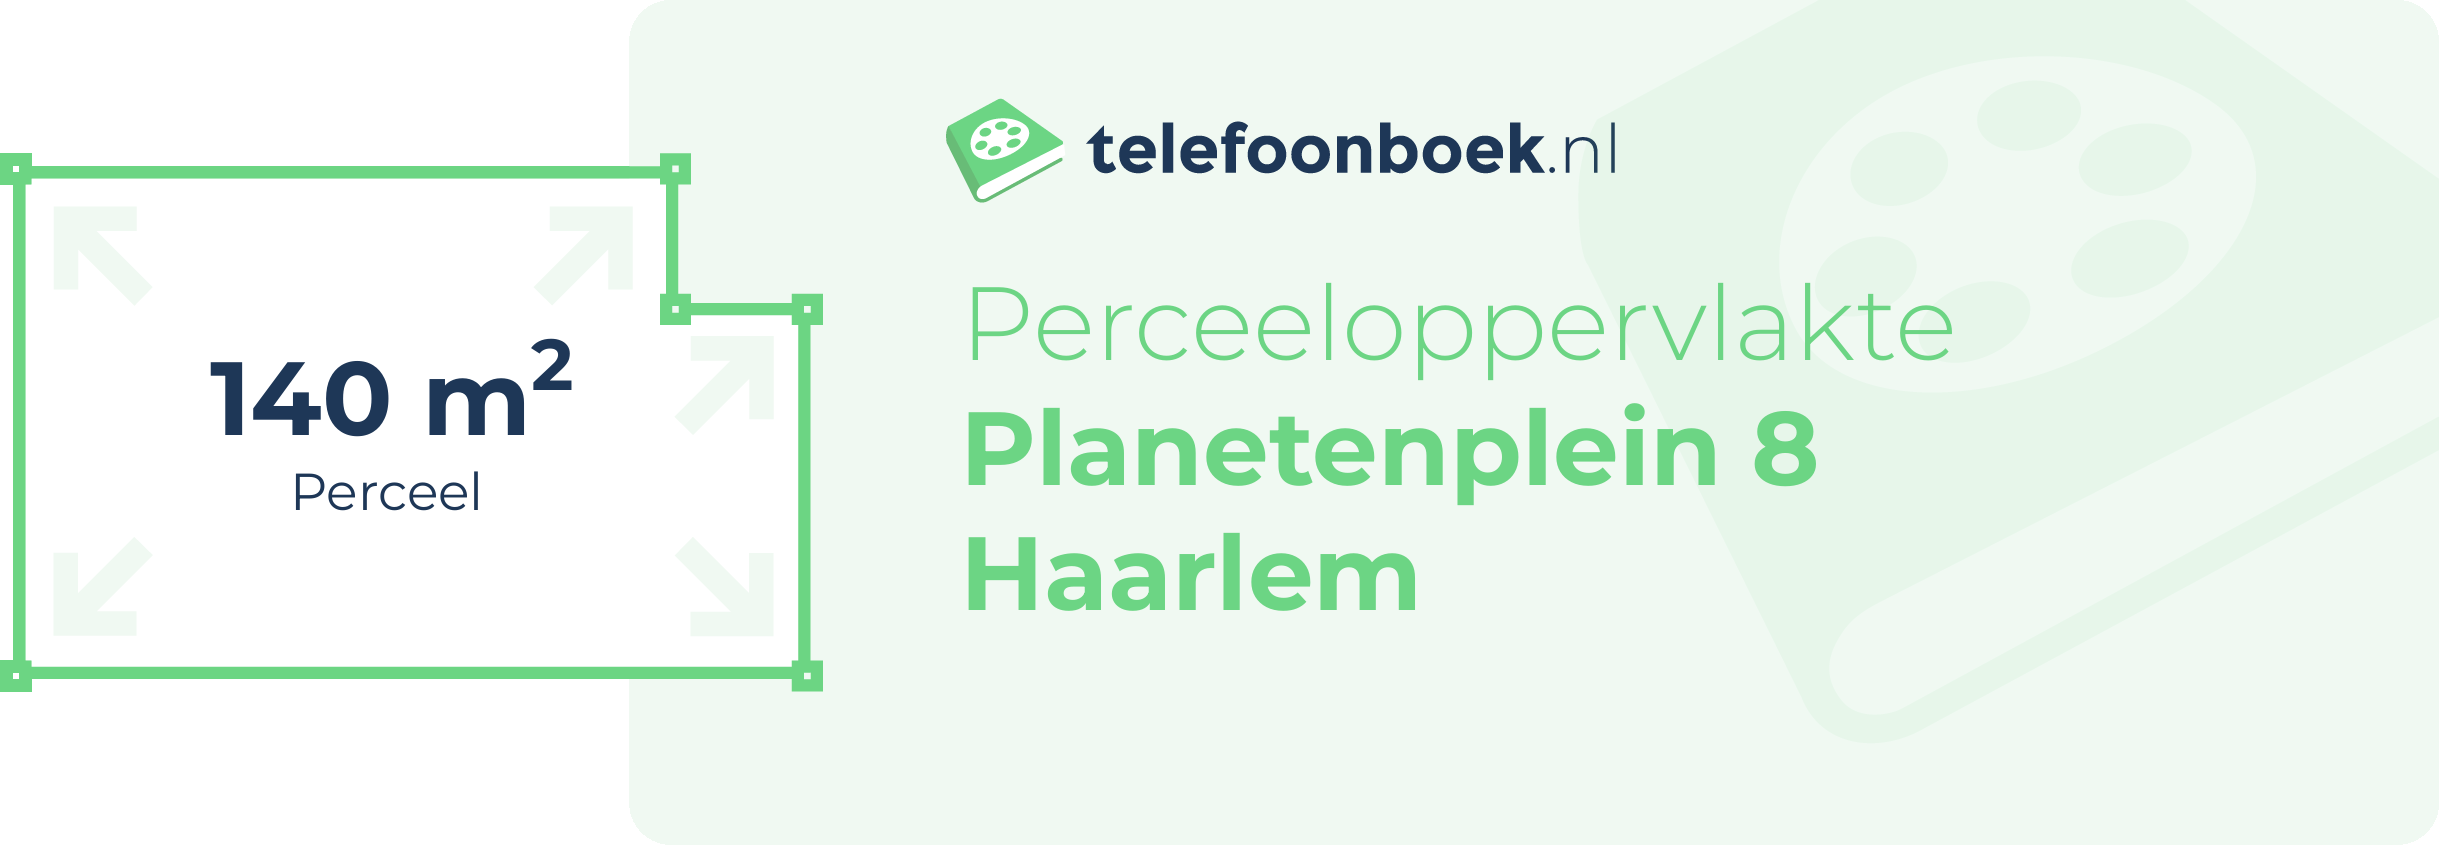 Perceeloppervlakte Planetenplein 8 Haarlem